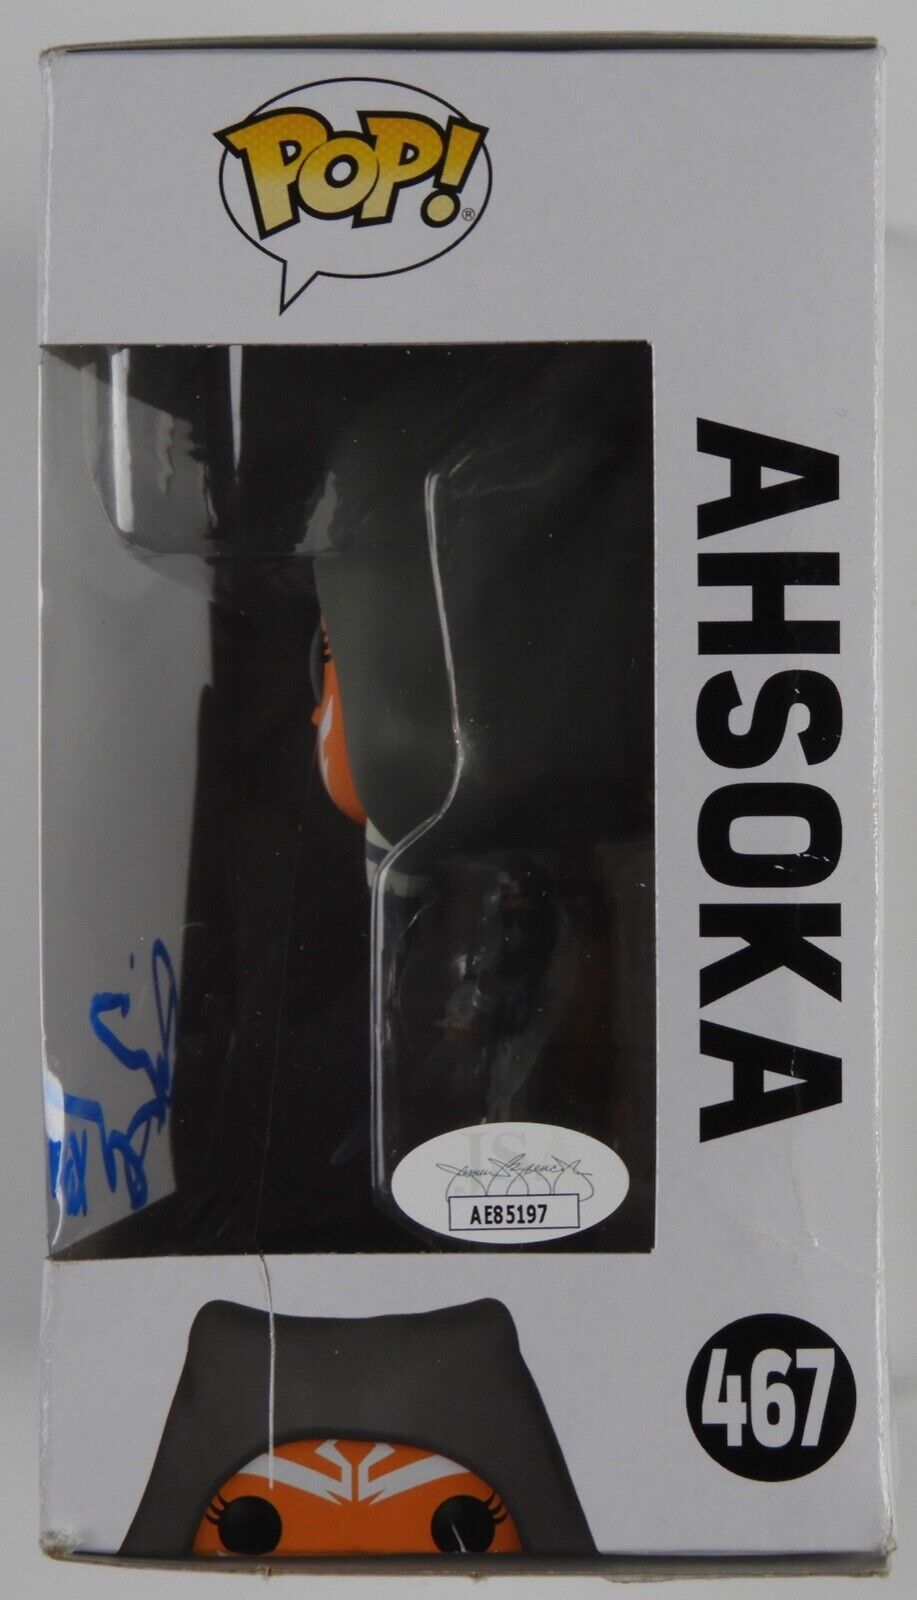 Rosario Dawson JSA Signed Autograph Funko Pop 464 Ashoka Star Wars